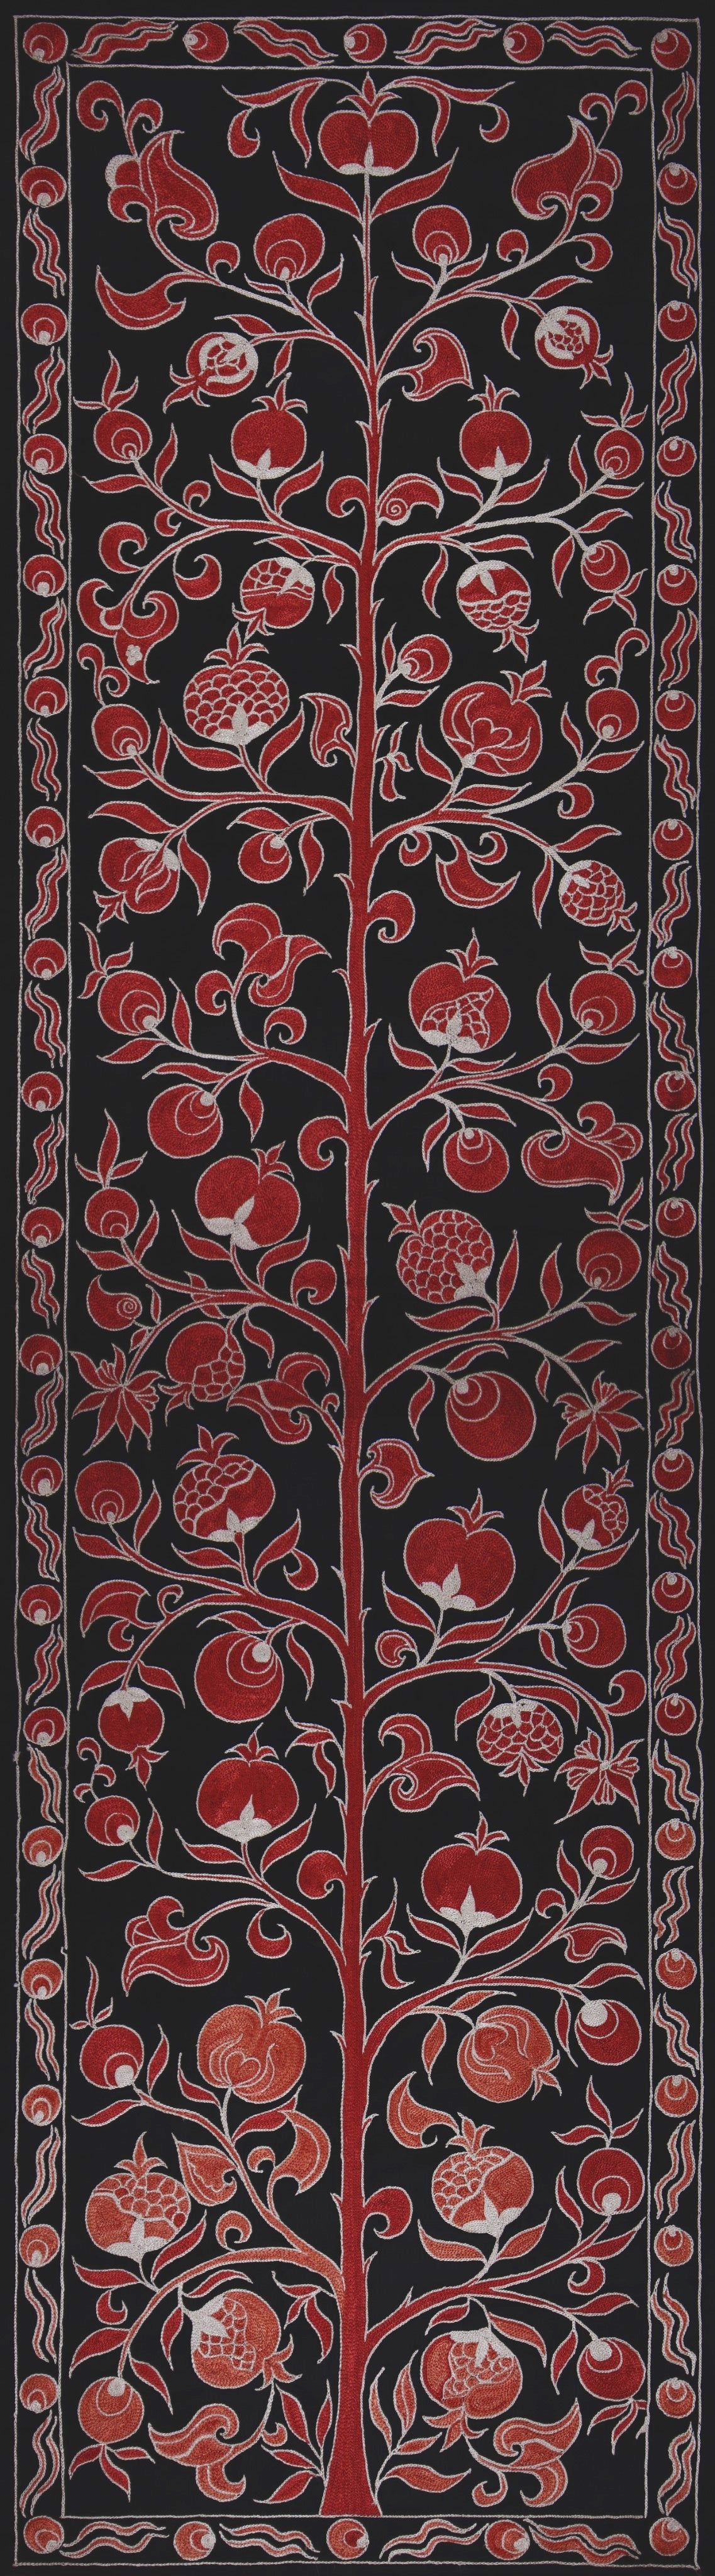 Ottoman Silk Red Pomegranate Tree Embroidered Suzani Runner